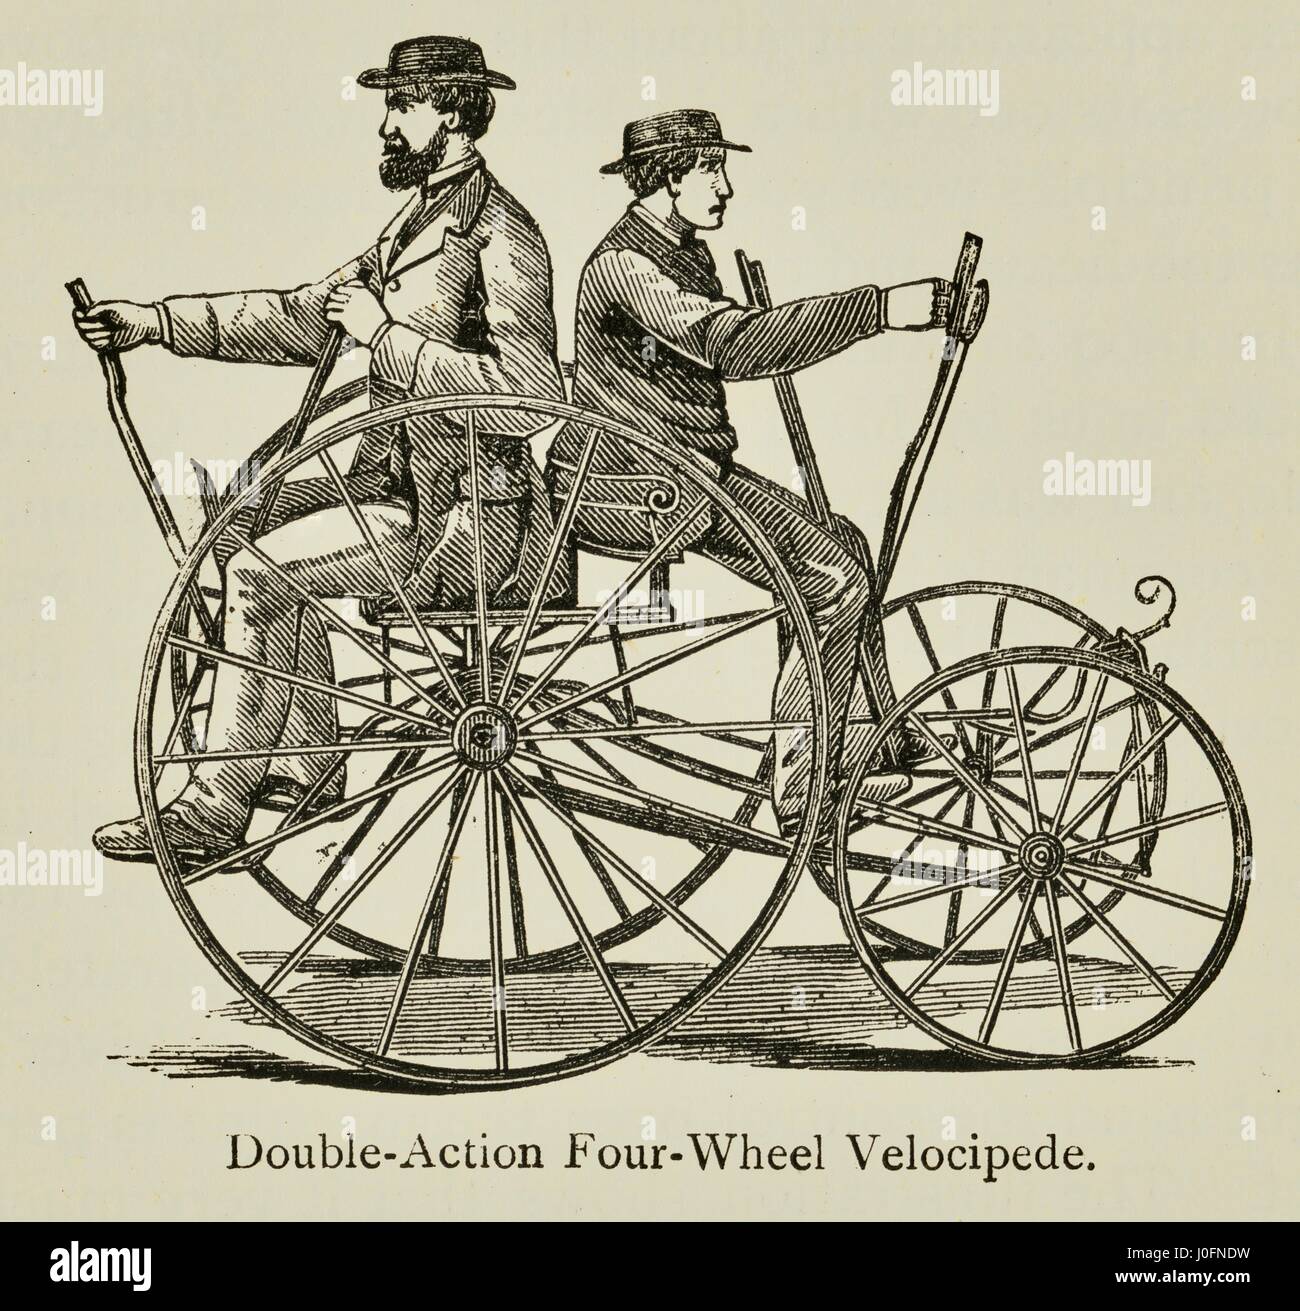 Two men riding a double-action four wheel velocipede Stock Photo